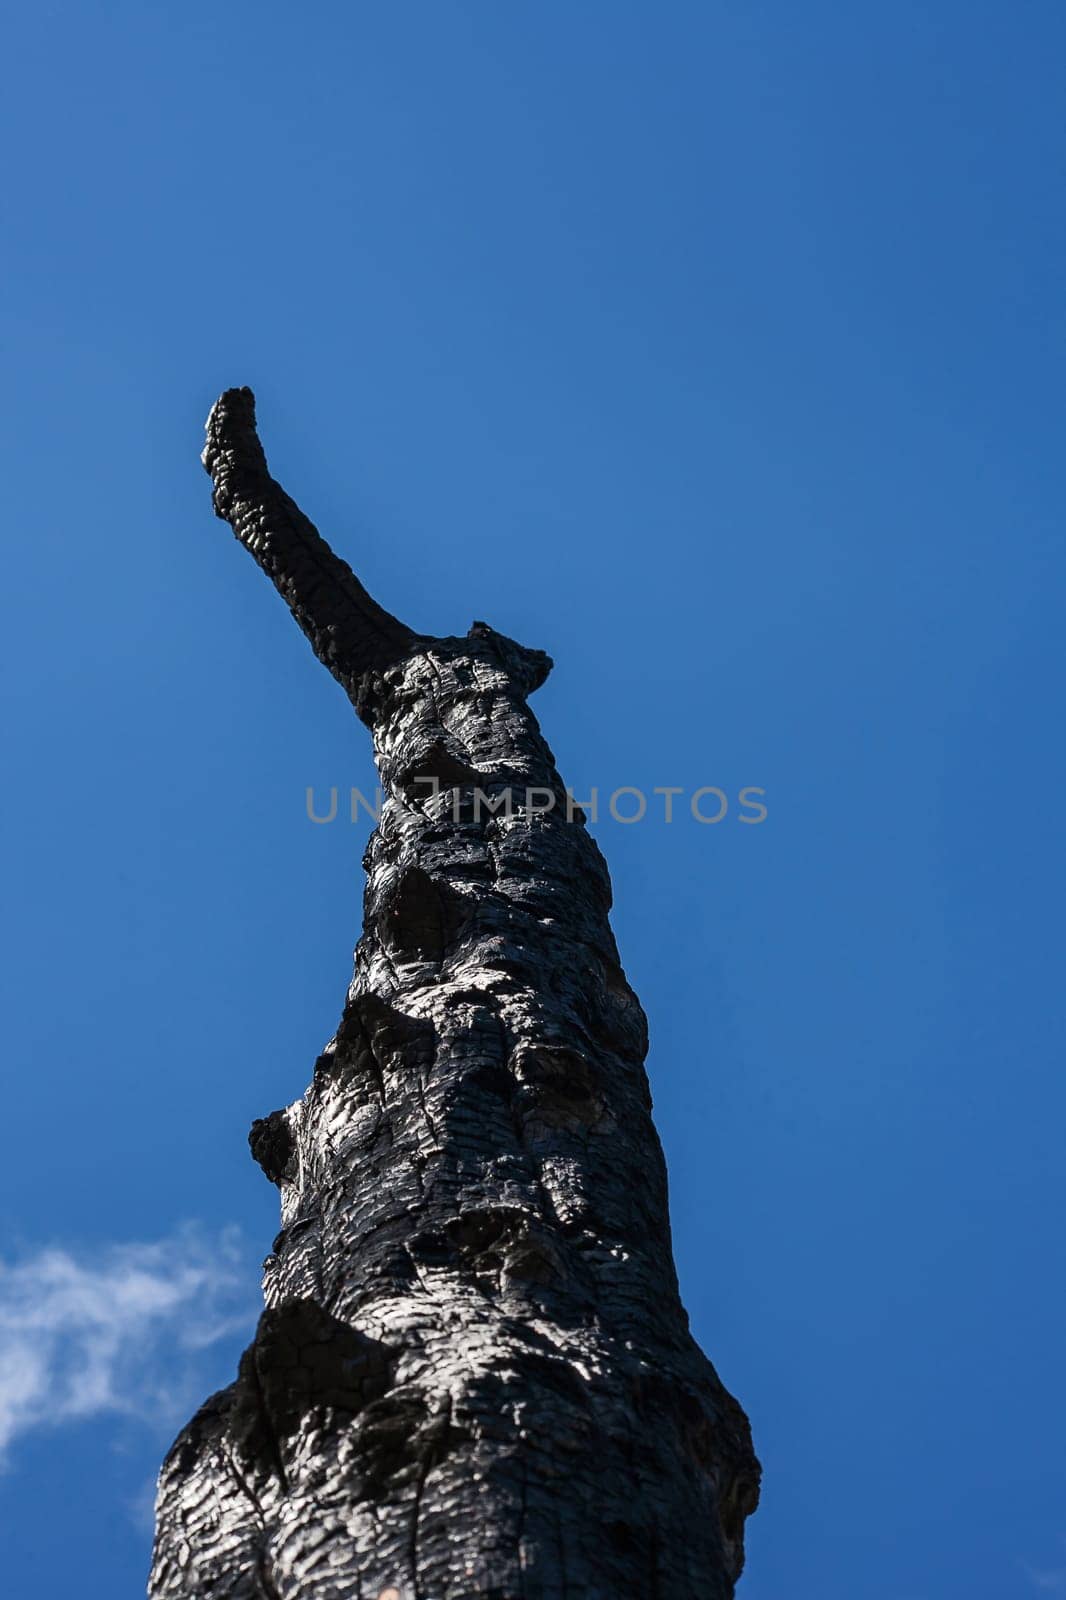 Burned Clanwilliam Cedar tree 12690 by kobus_peche